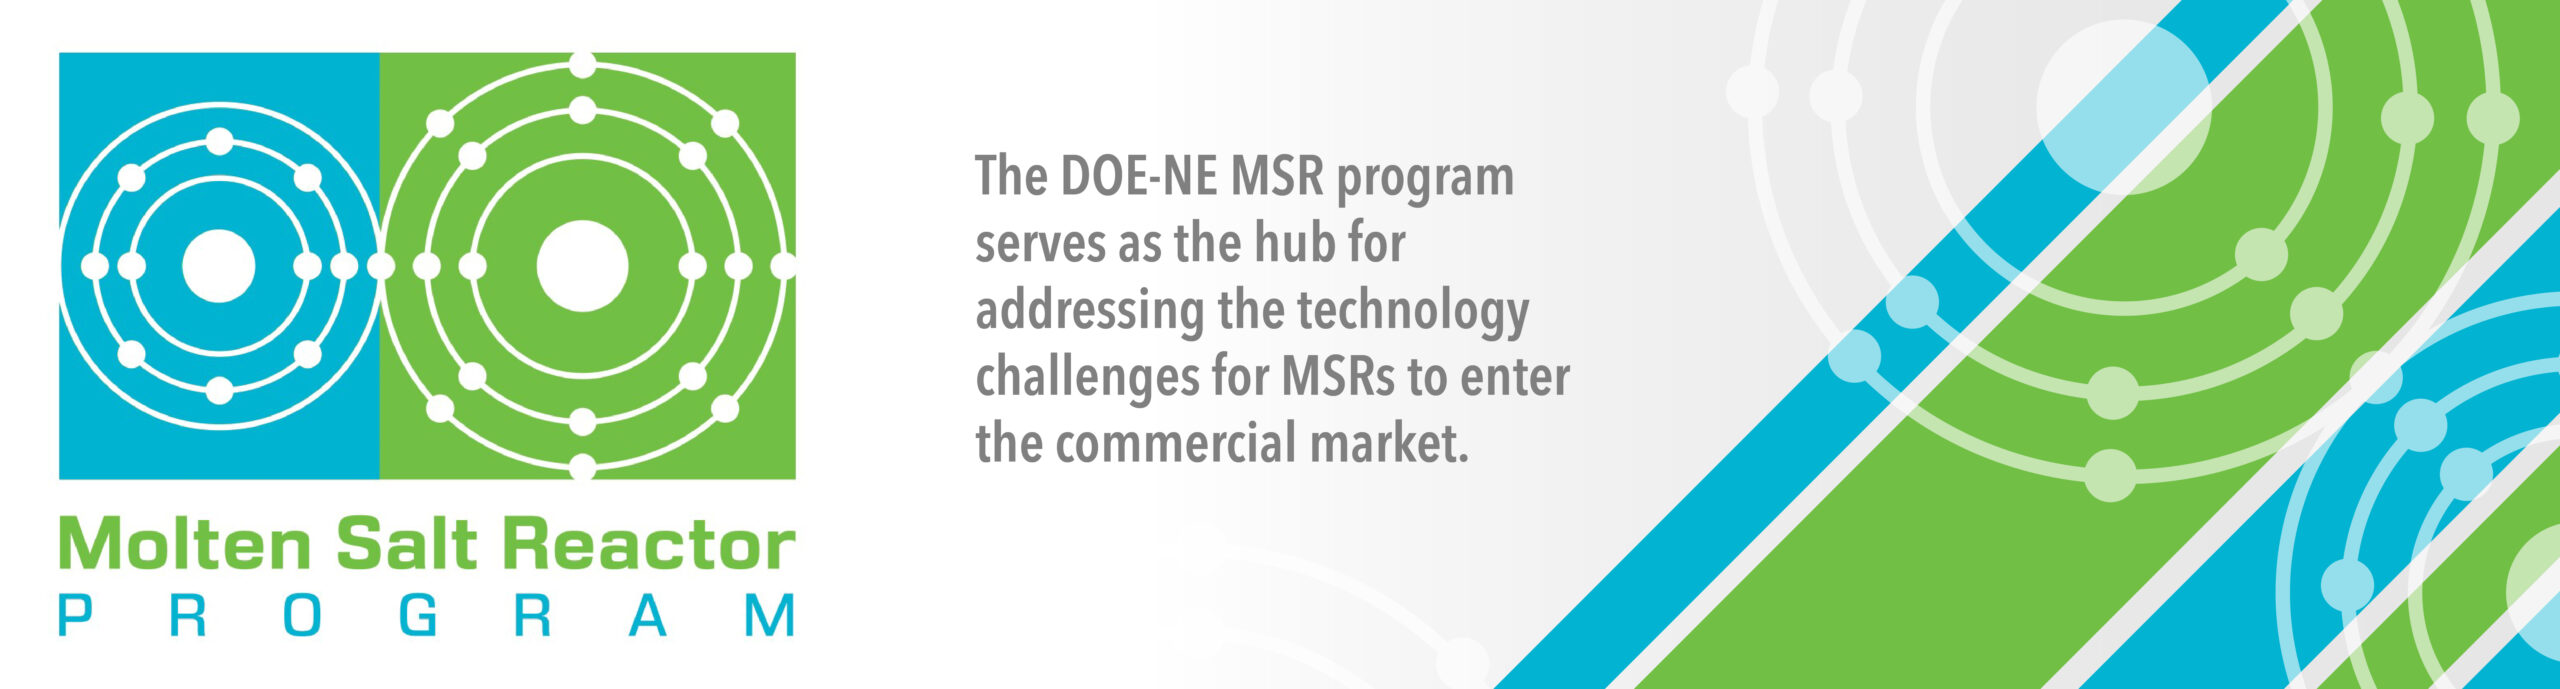 The DOE-NE Molten Salt Reactor (MSR) program serves as the hub for addressing the technology challenges for MSRs to enter the commercial market.